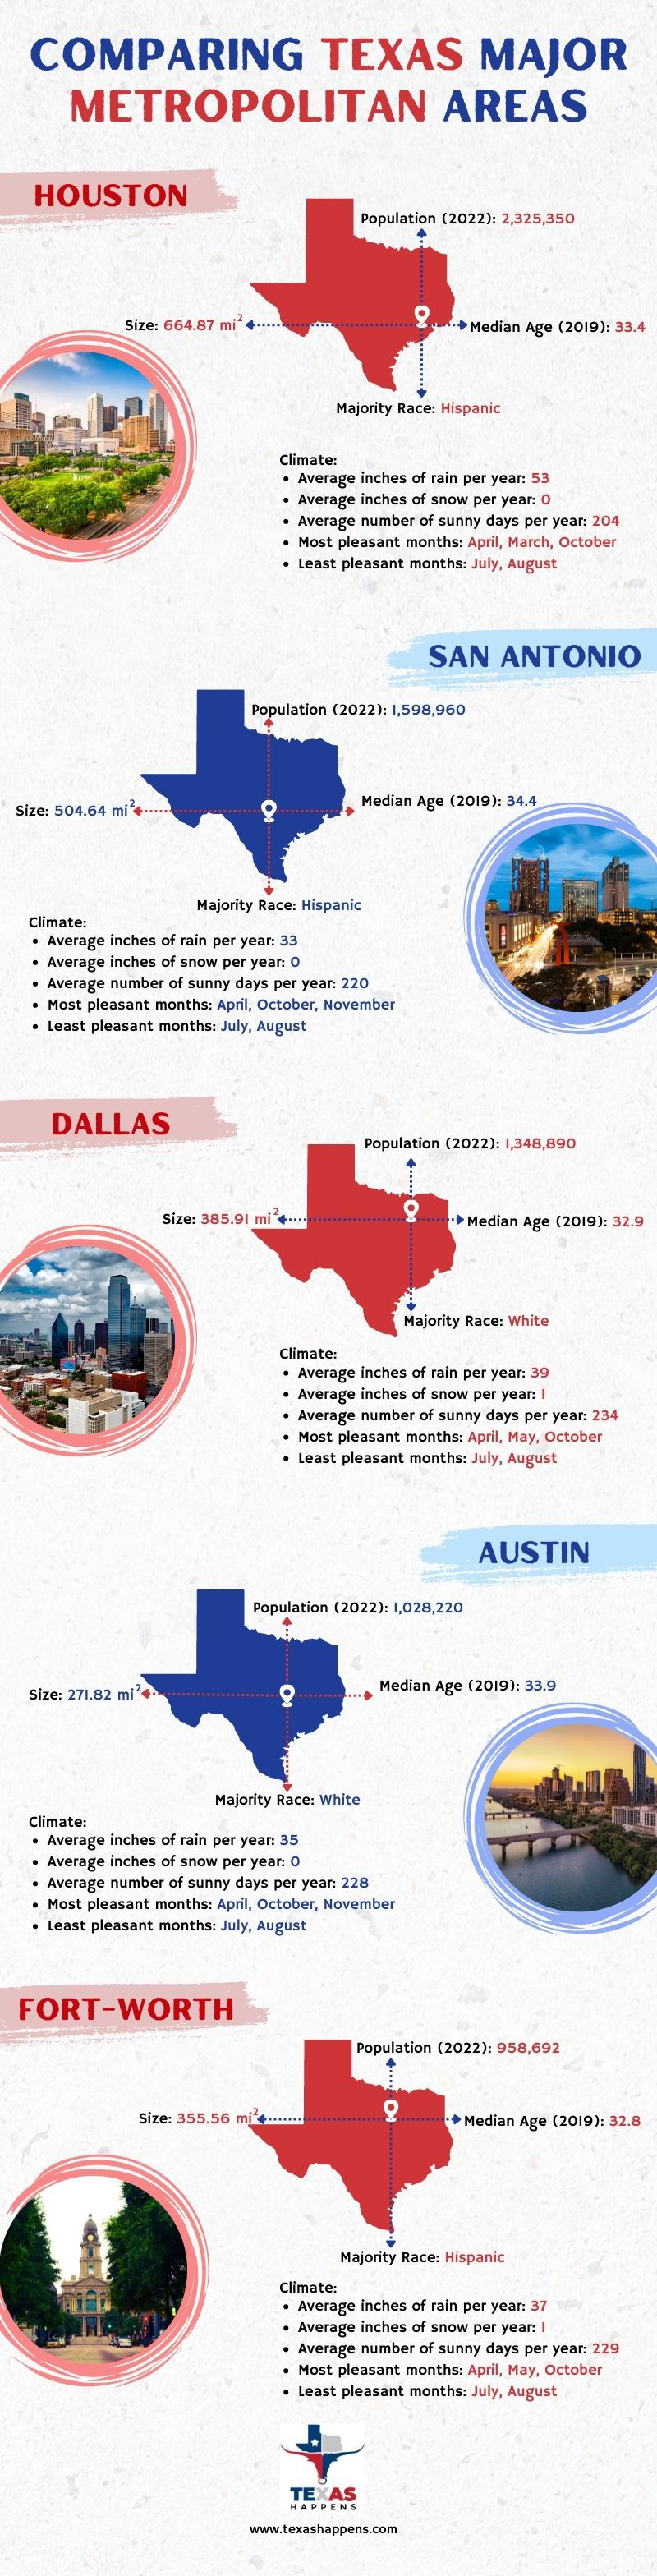 Comparing the Major Metropolitan Areas in Texas